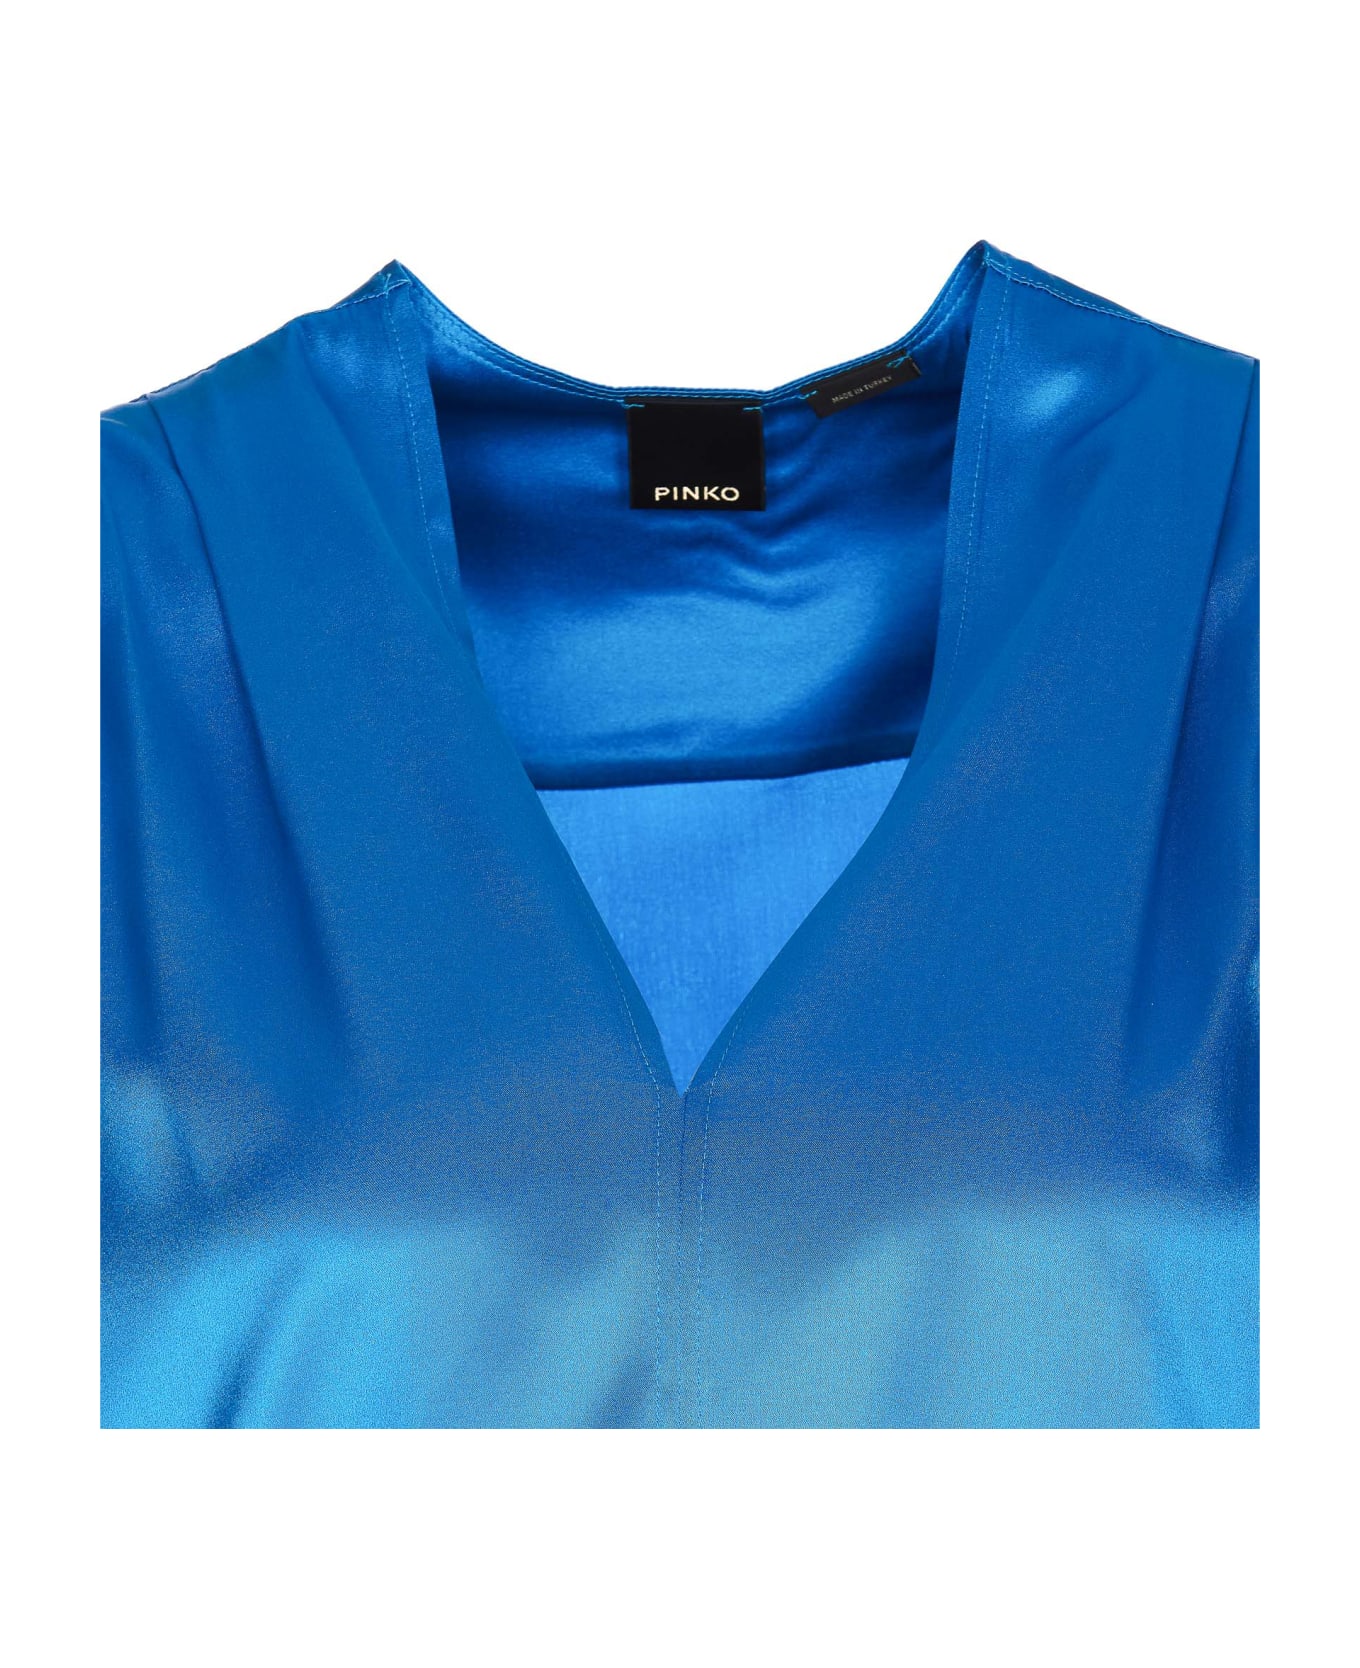 Pinko Breve Shirt - Blue